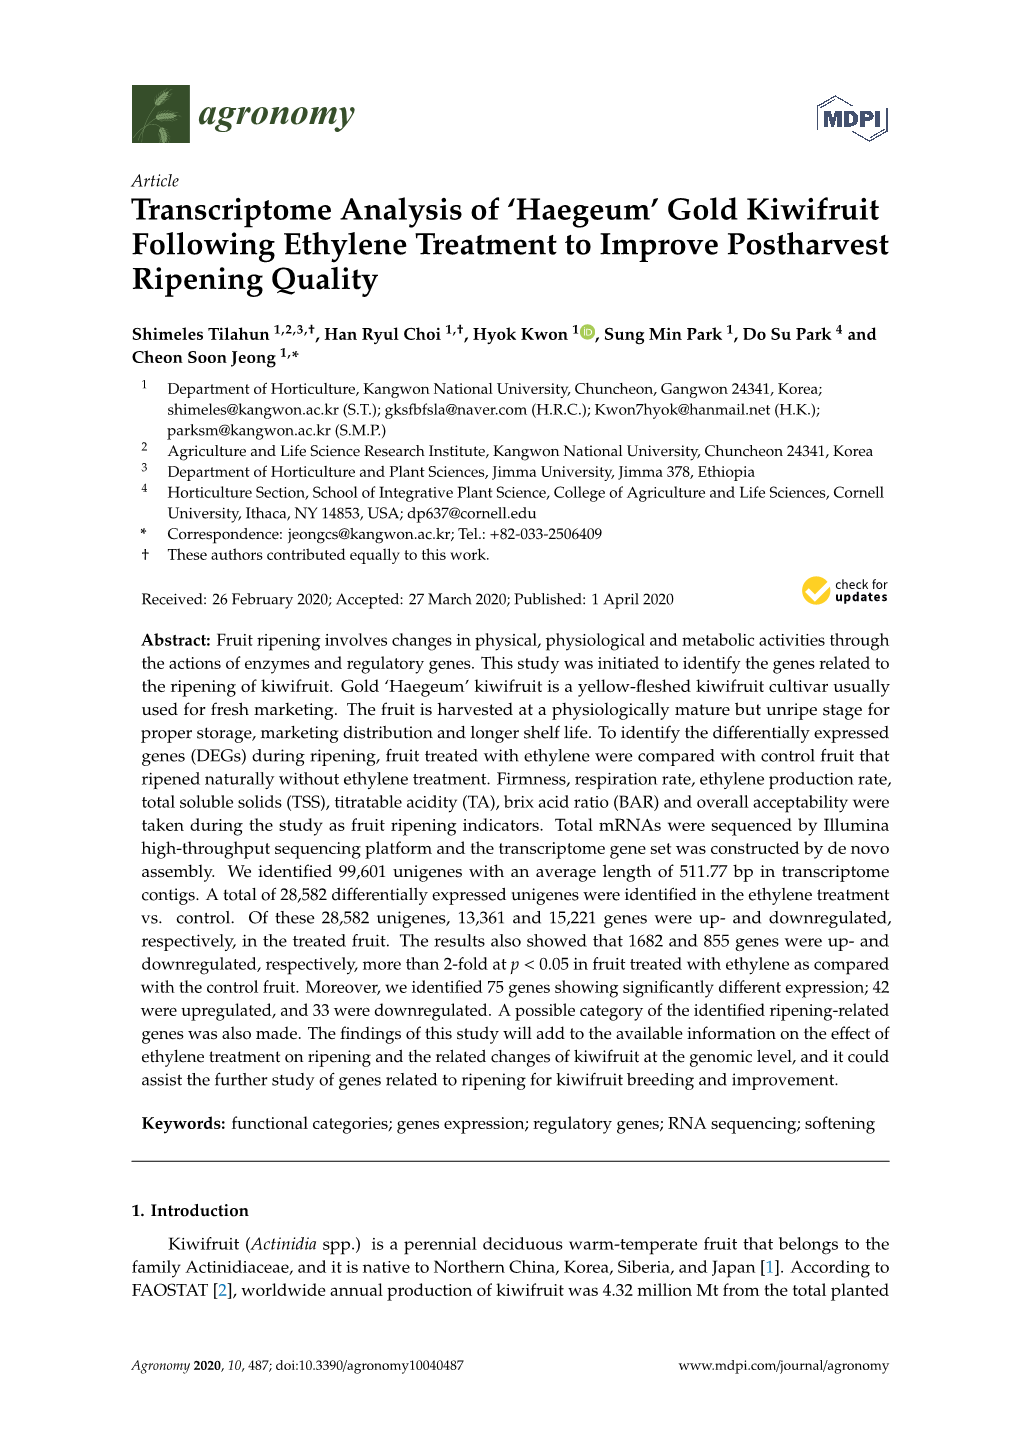 Transcriptome Analysis of 'Haegeum' Gold Kiwifruit Following Ethylene Treatment to Improve Postharvest Ripening Quality